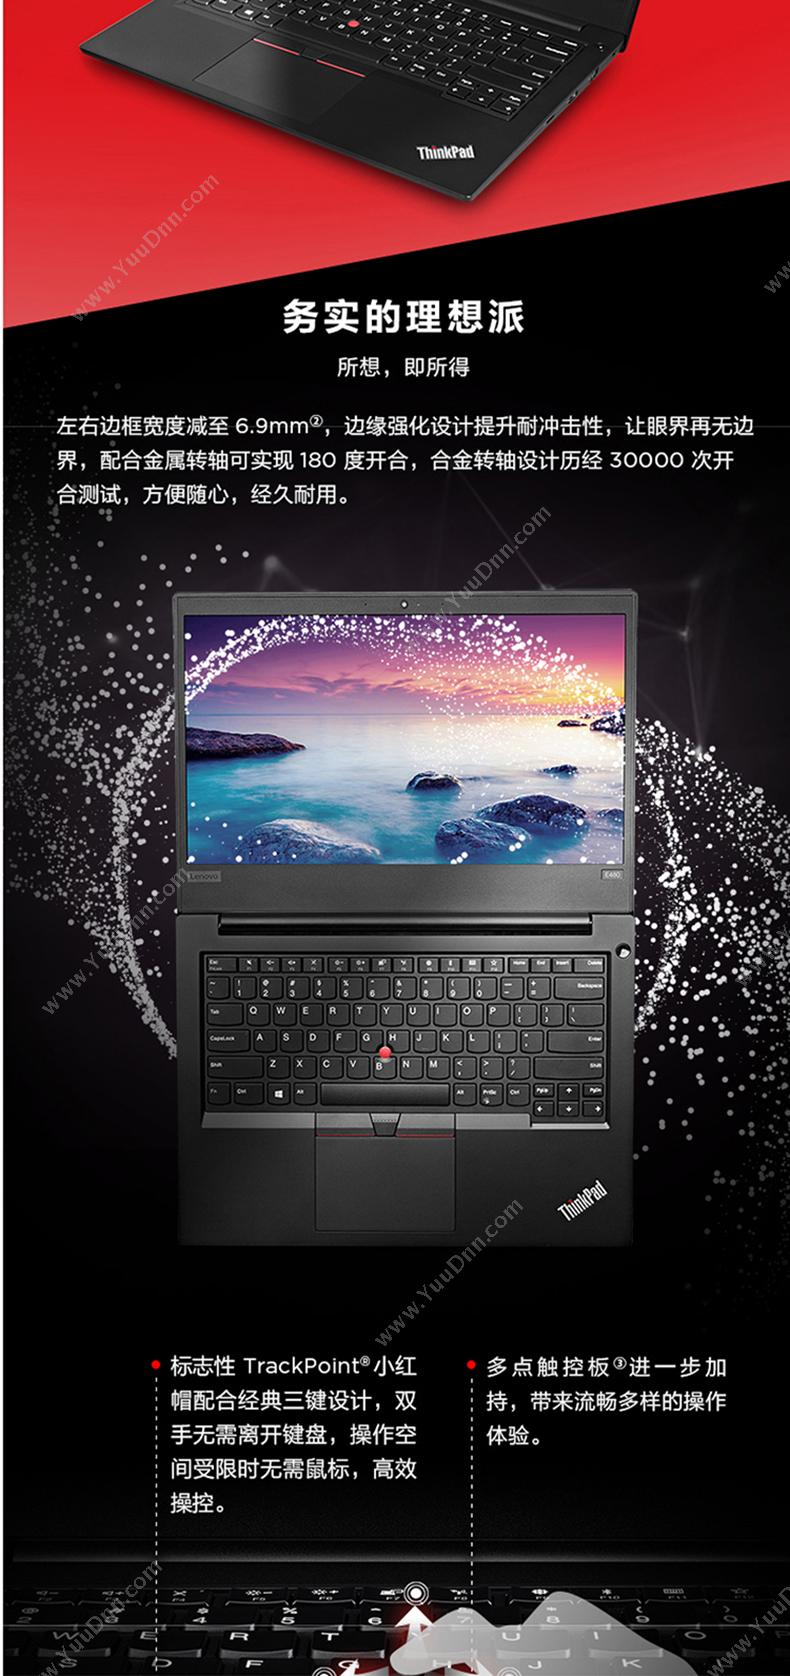 联想 Lenovo E480-047  i5-8250U（黑）  /集成/8GB/128+1TB/2GB独显/无光驱/LED/14英寸/保修1年/DOS 笔记本